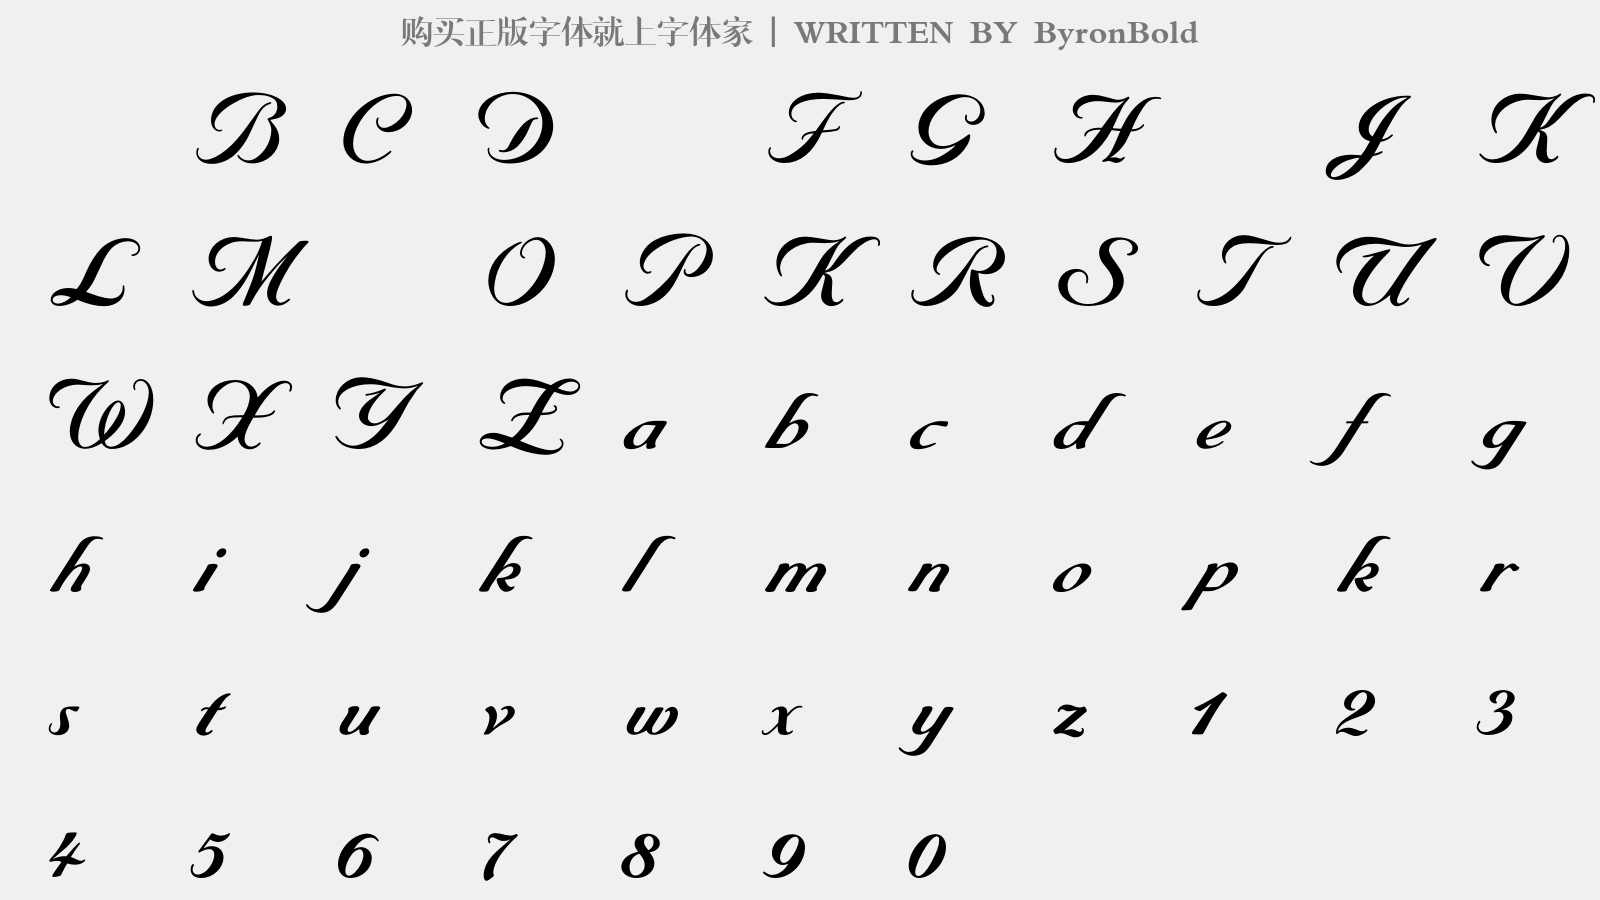 ByronBold - 大写字母/小写字母/数字